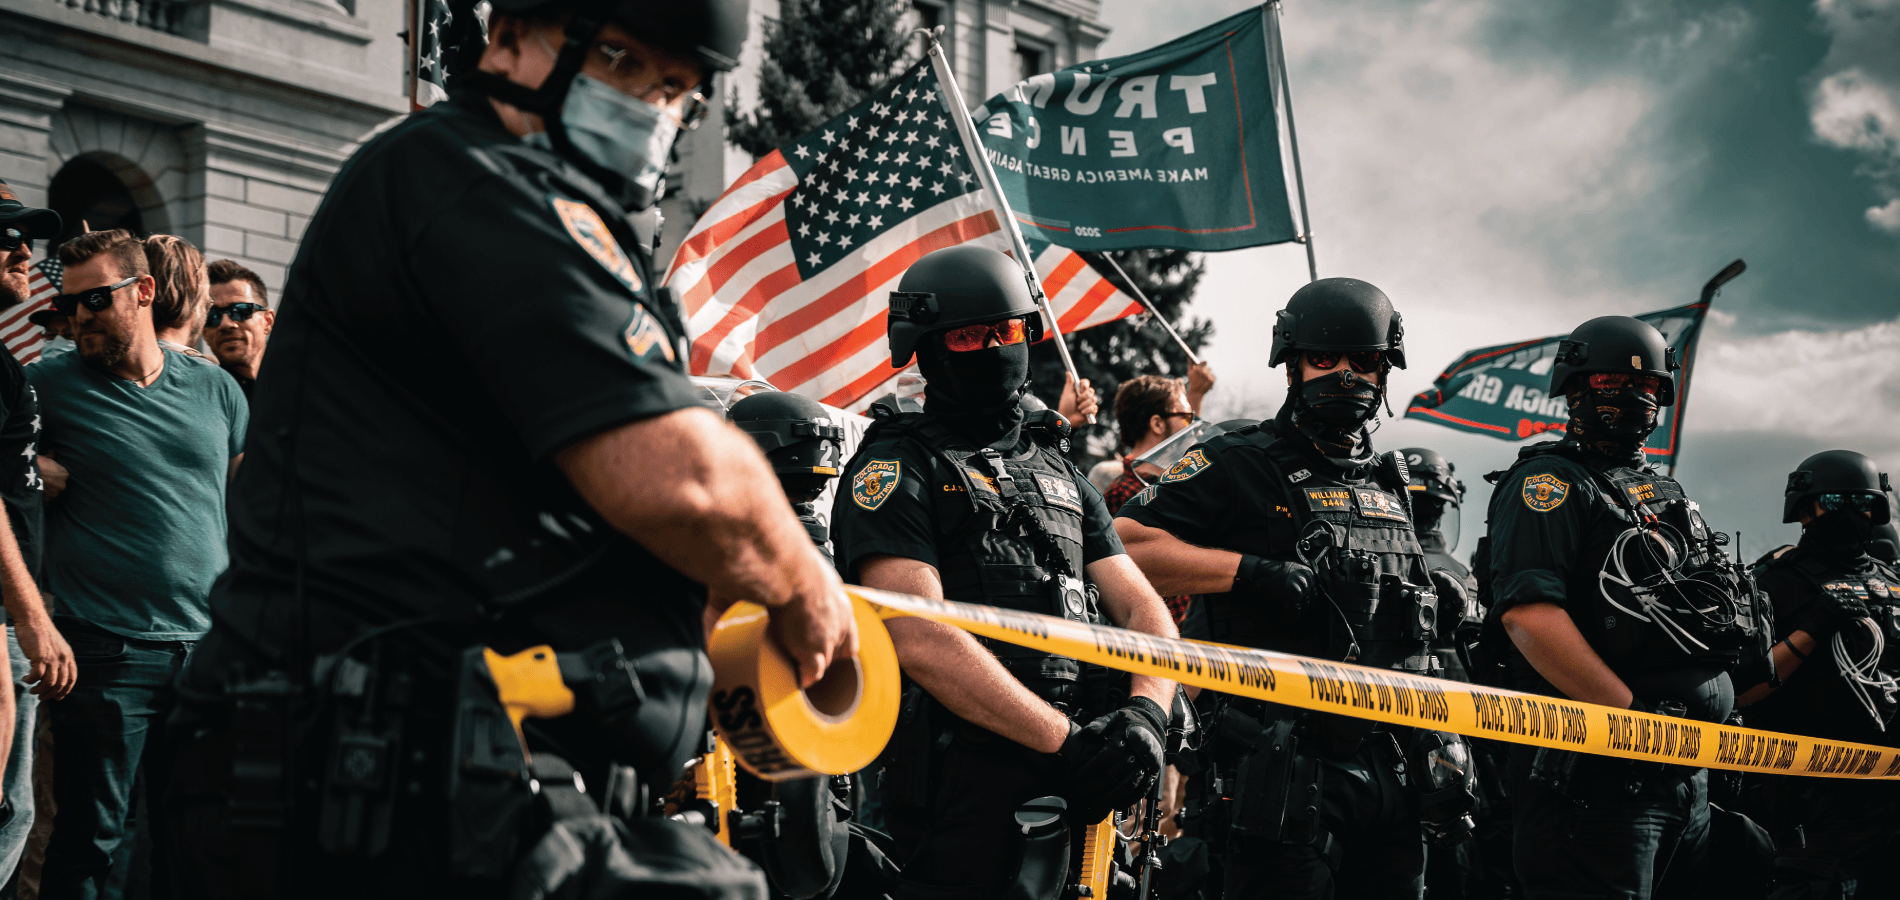 image of police and pro-Trump protestors